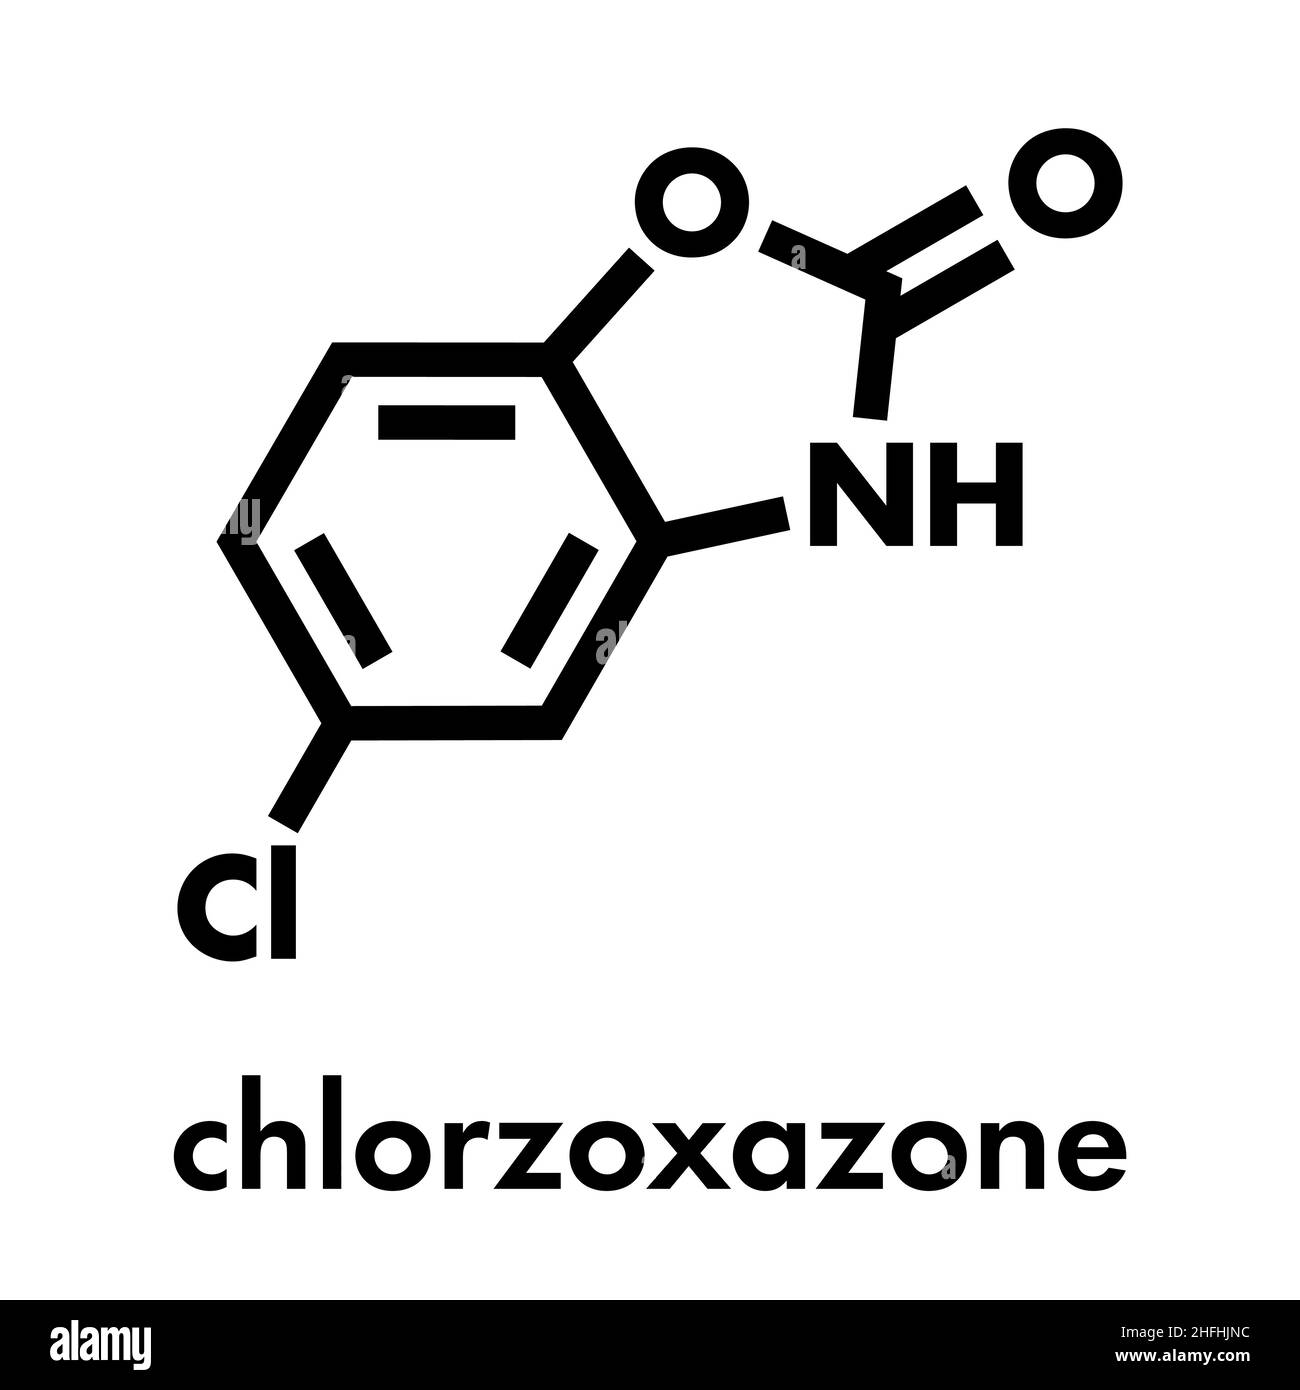 https://c8.alamy.com/compes/2hfhjnc/molecula-de-farmaco-relajante-muscular-de-chlorzoxazona-formula-esqueletica-2hfhjnc.jpg